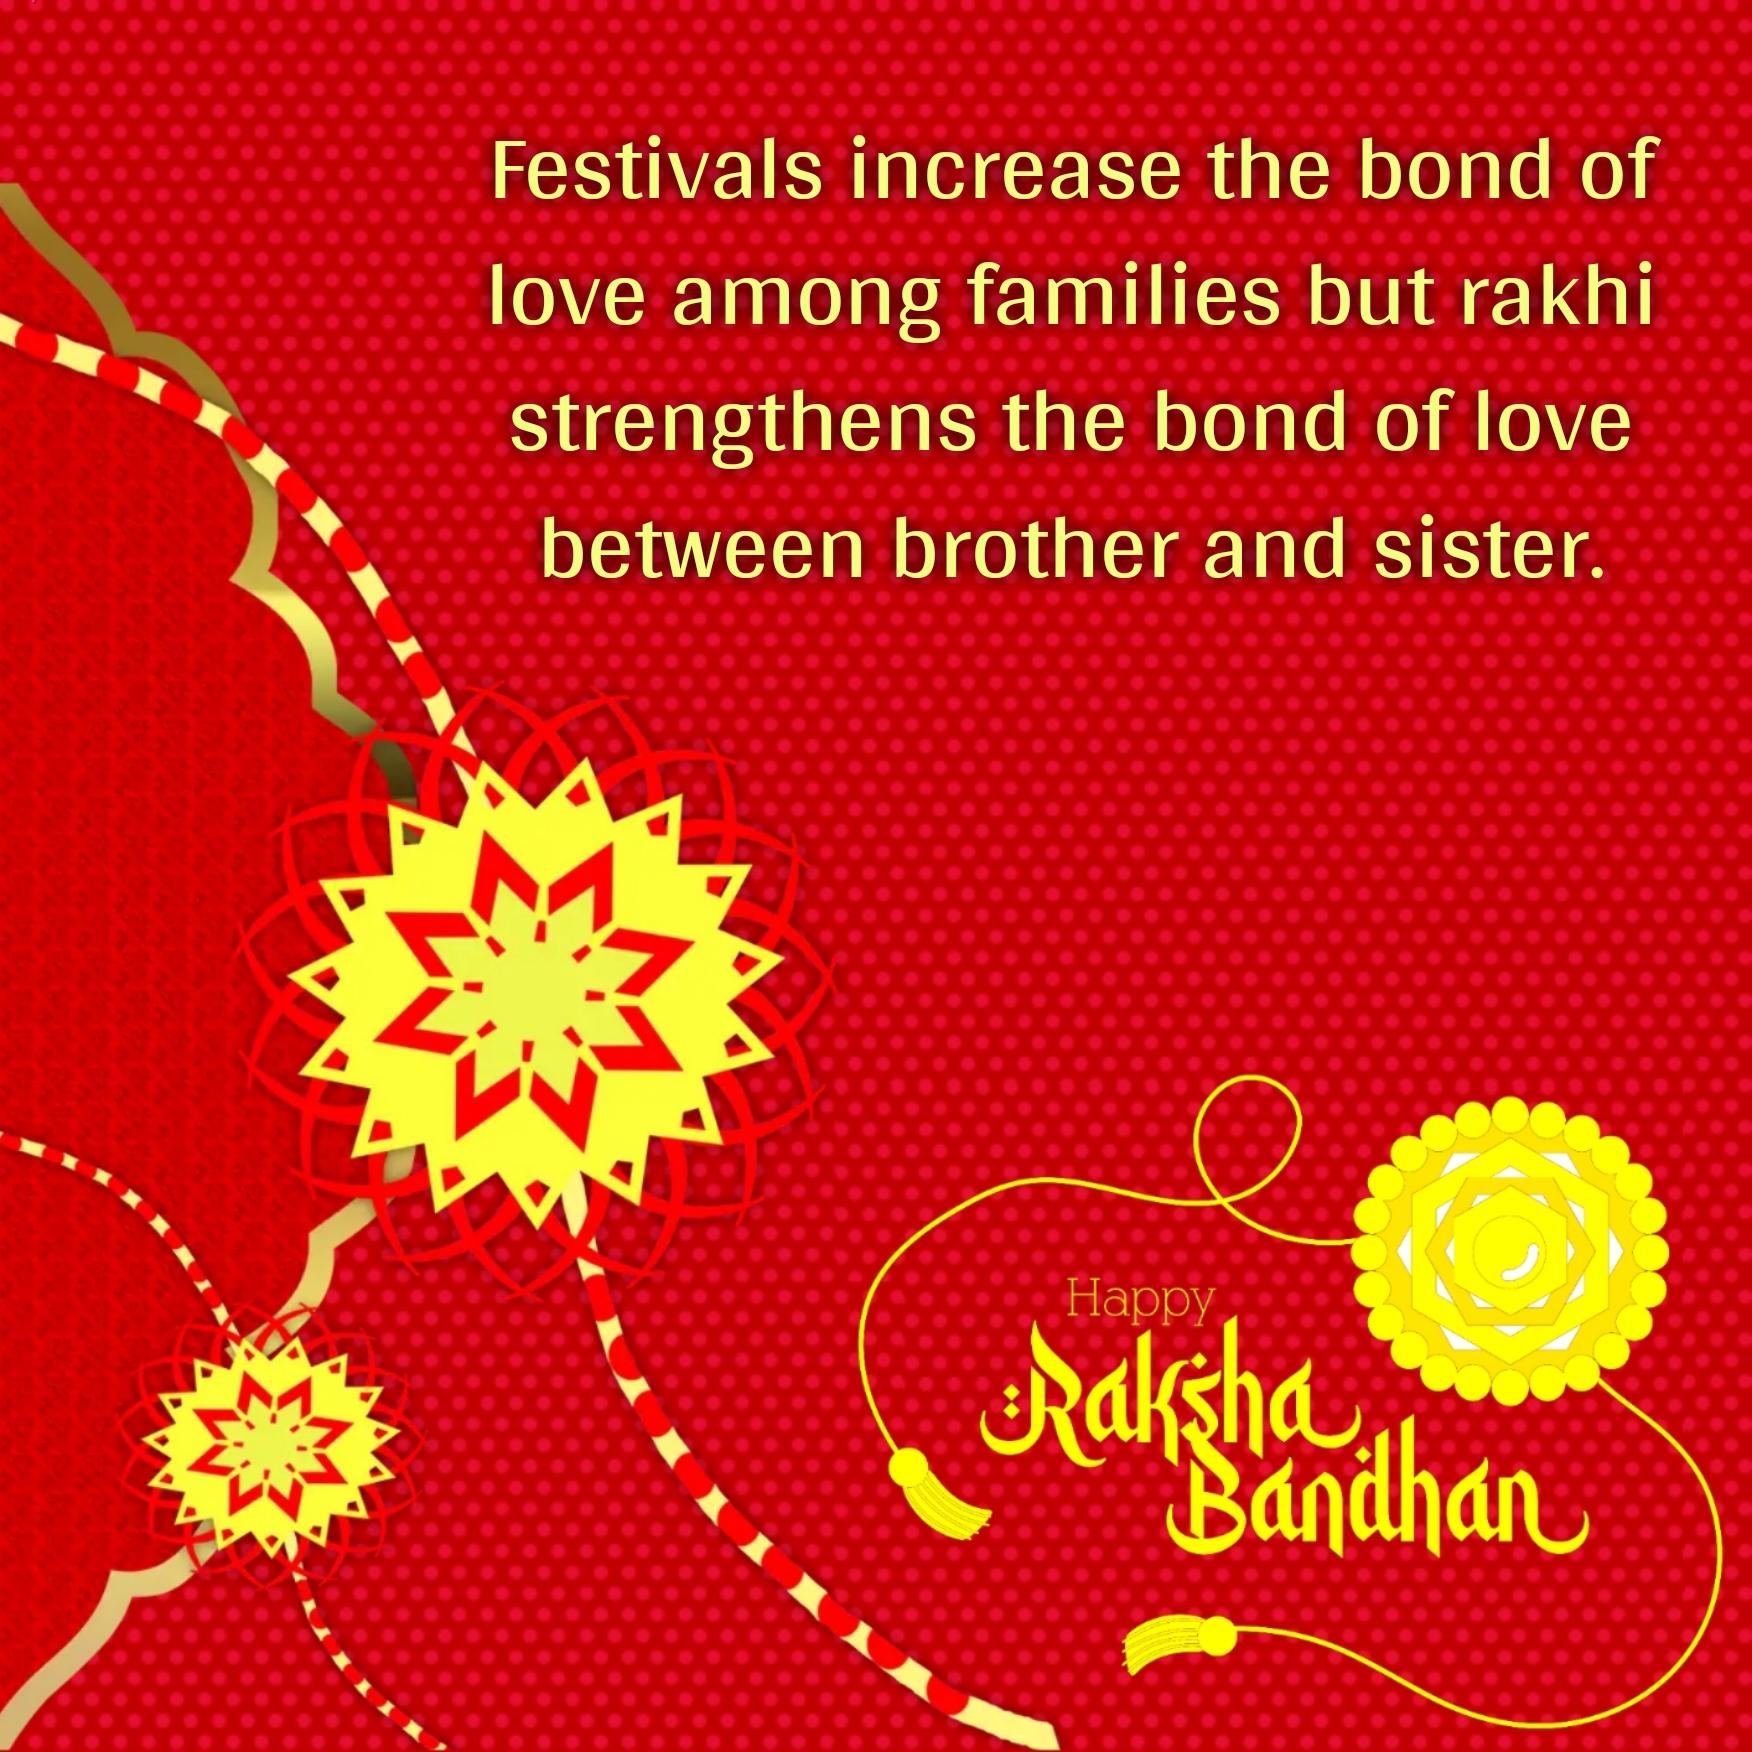 Festivals increase the bond of love among families but rakhi strengthens